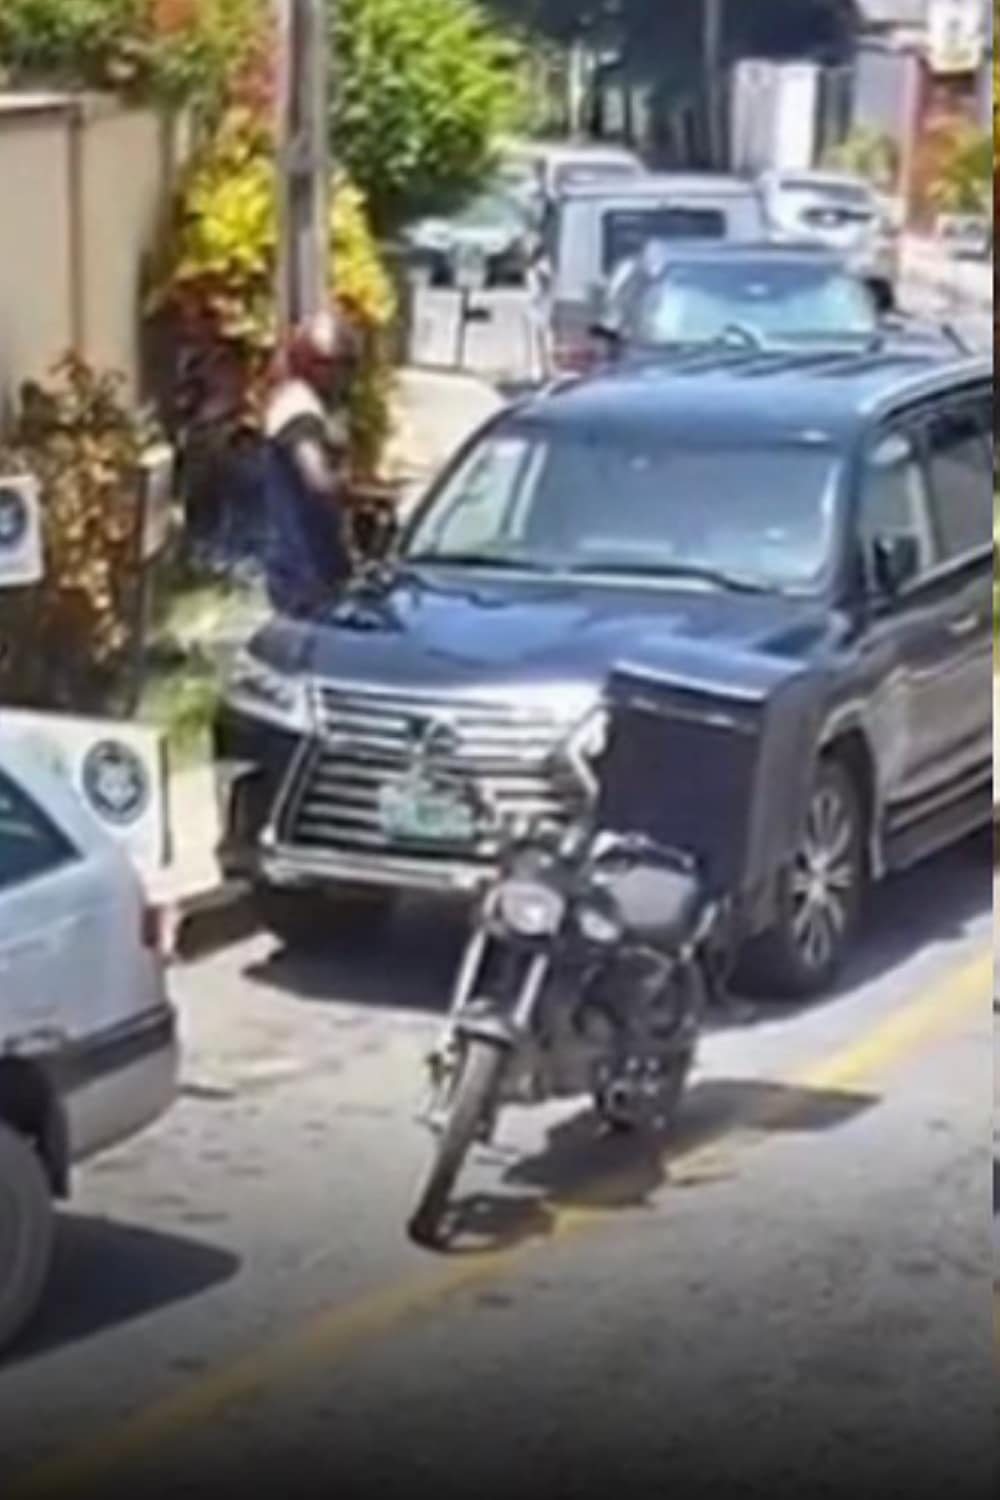 "Caught on CCTV": dispatch rider's brazen side-mirror theft in broad daylight shocks Lagos